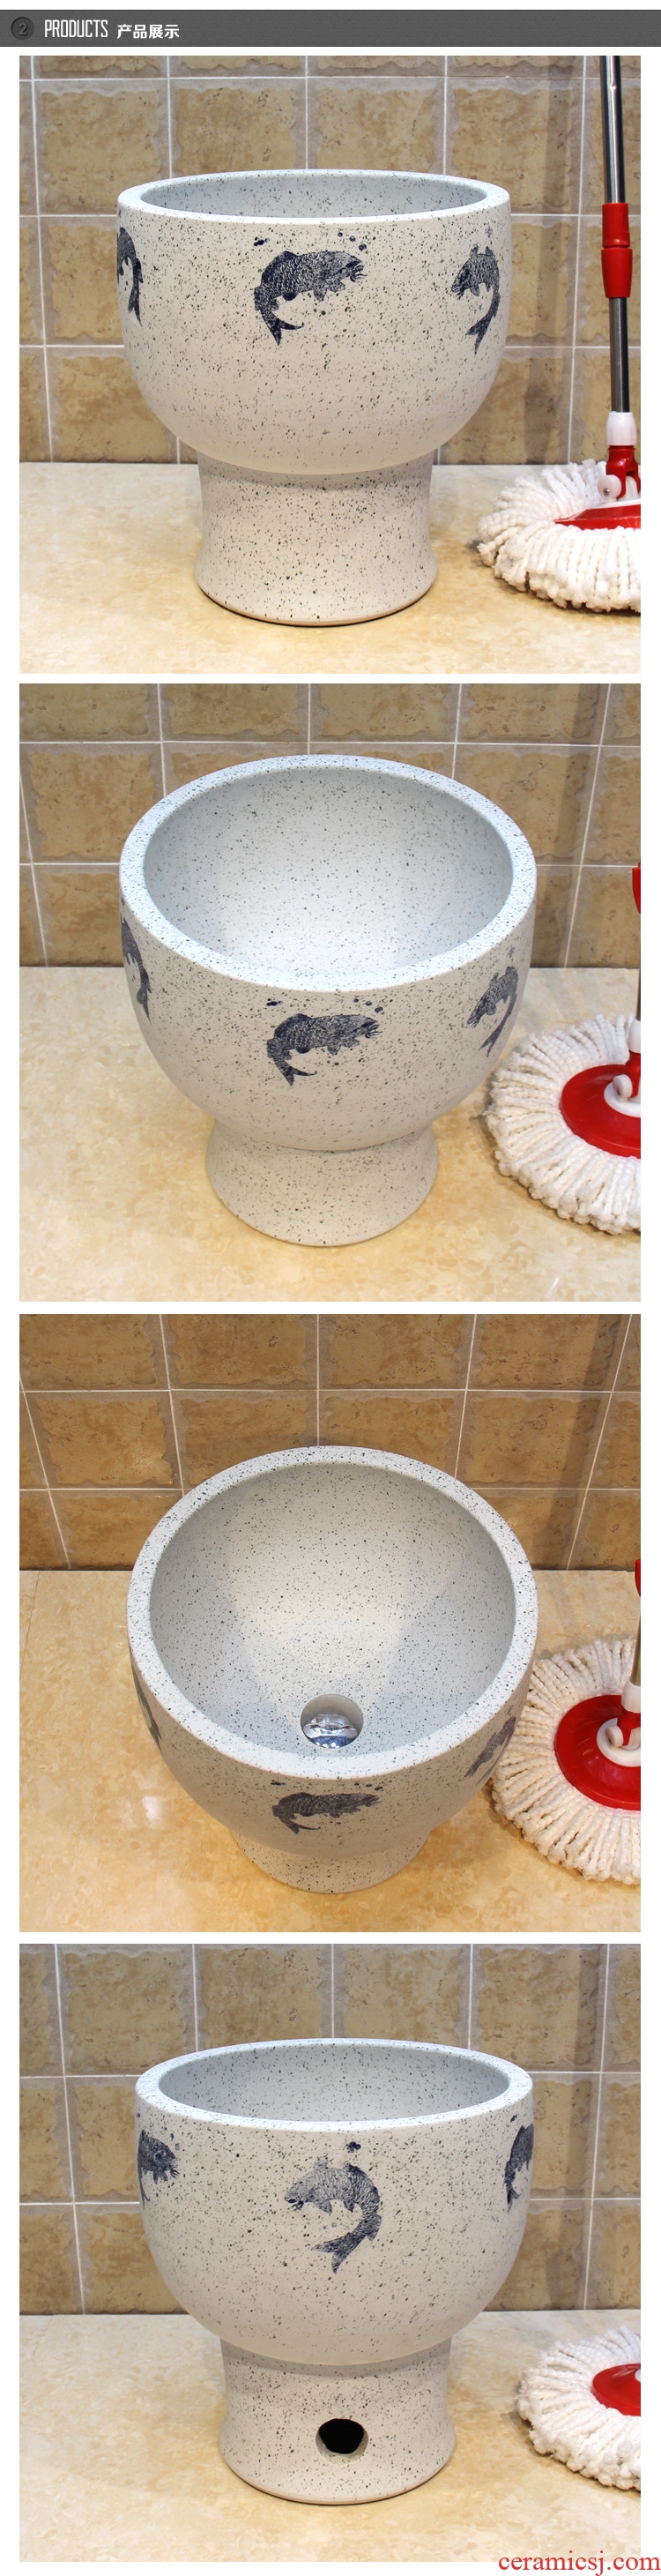 Jingdezhen ceramic art mop pool conjoined frosted fish mop bucket mop pool